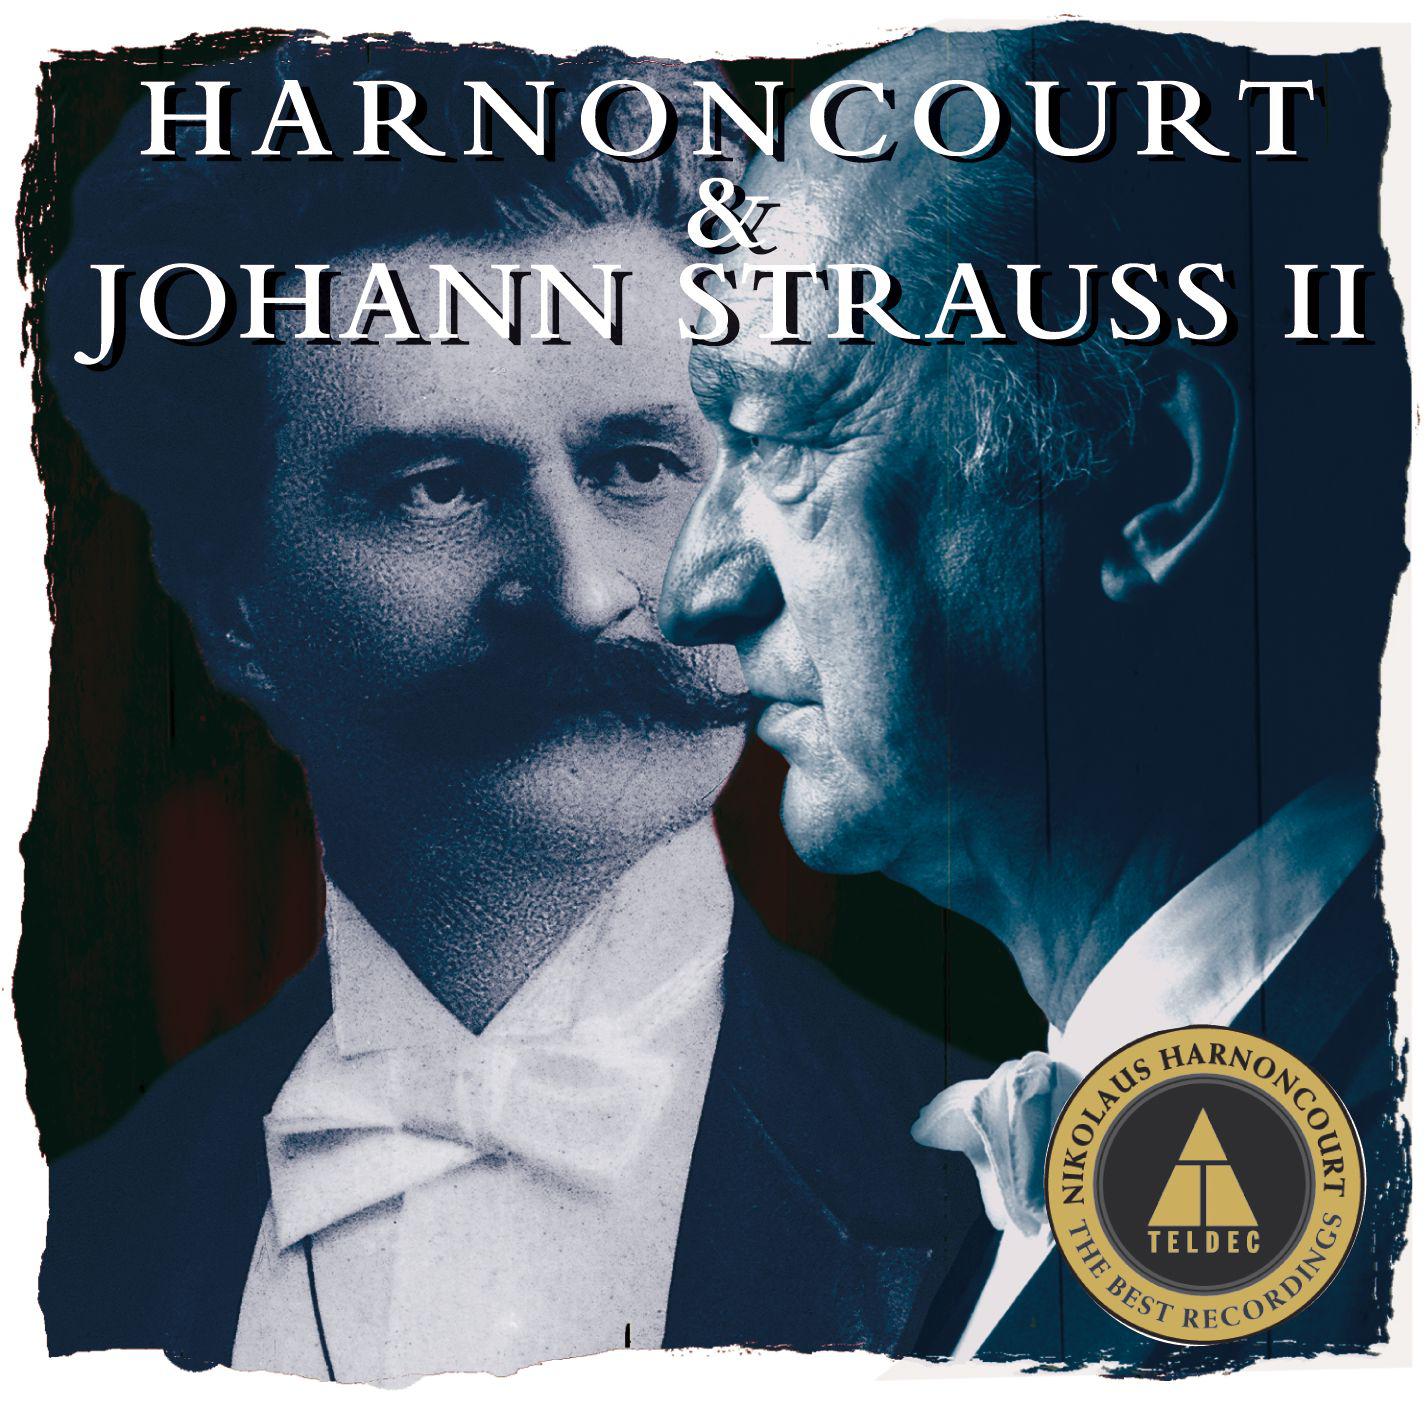 Harnoncourt conducts Johann Strauss II